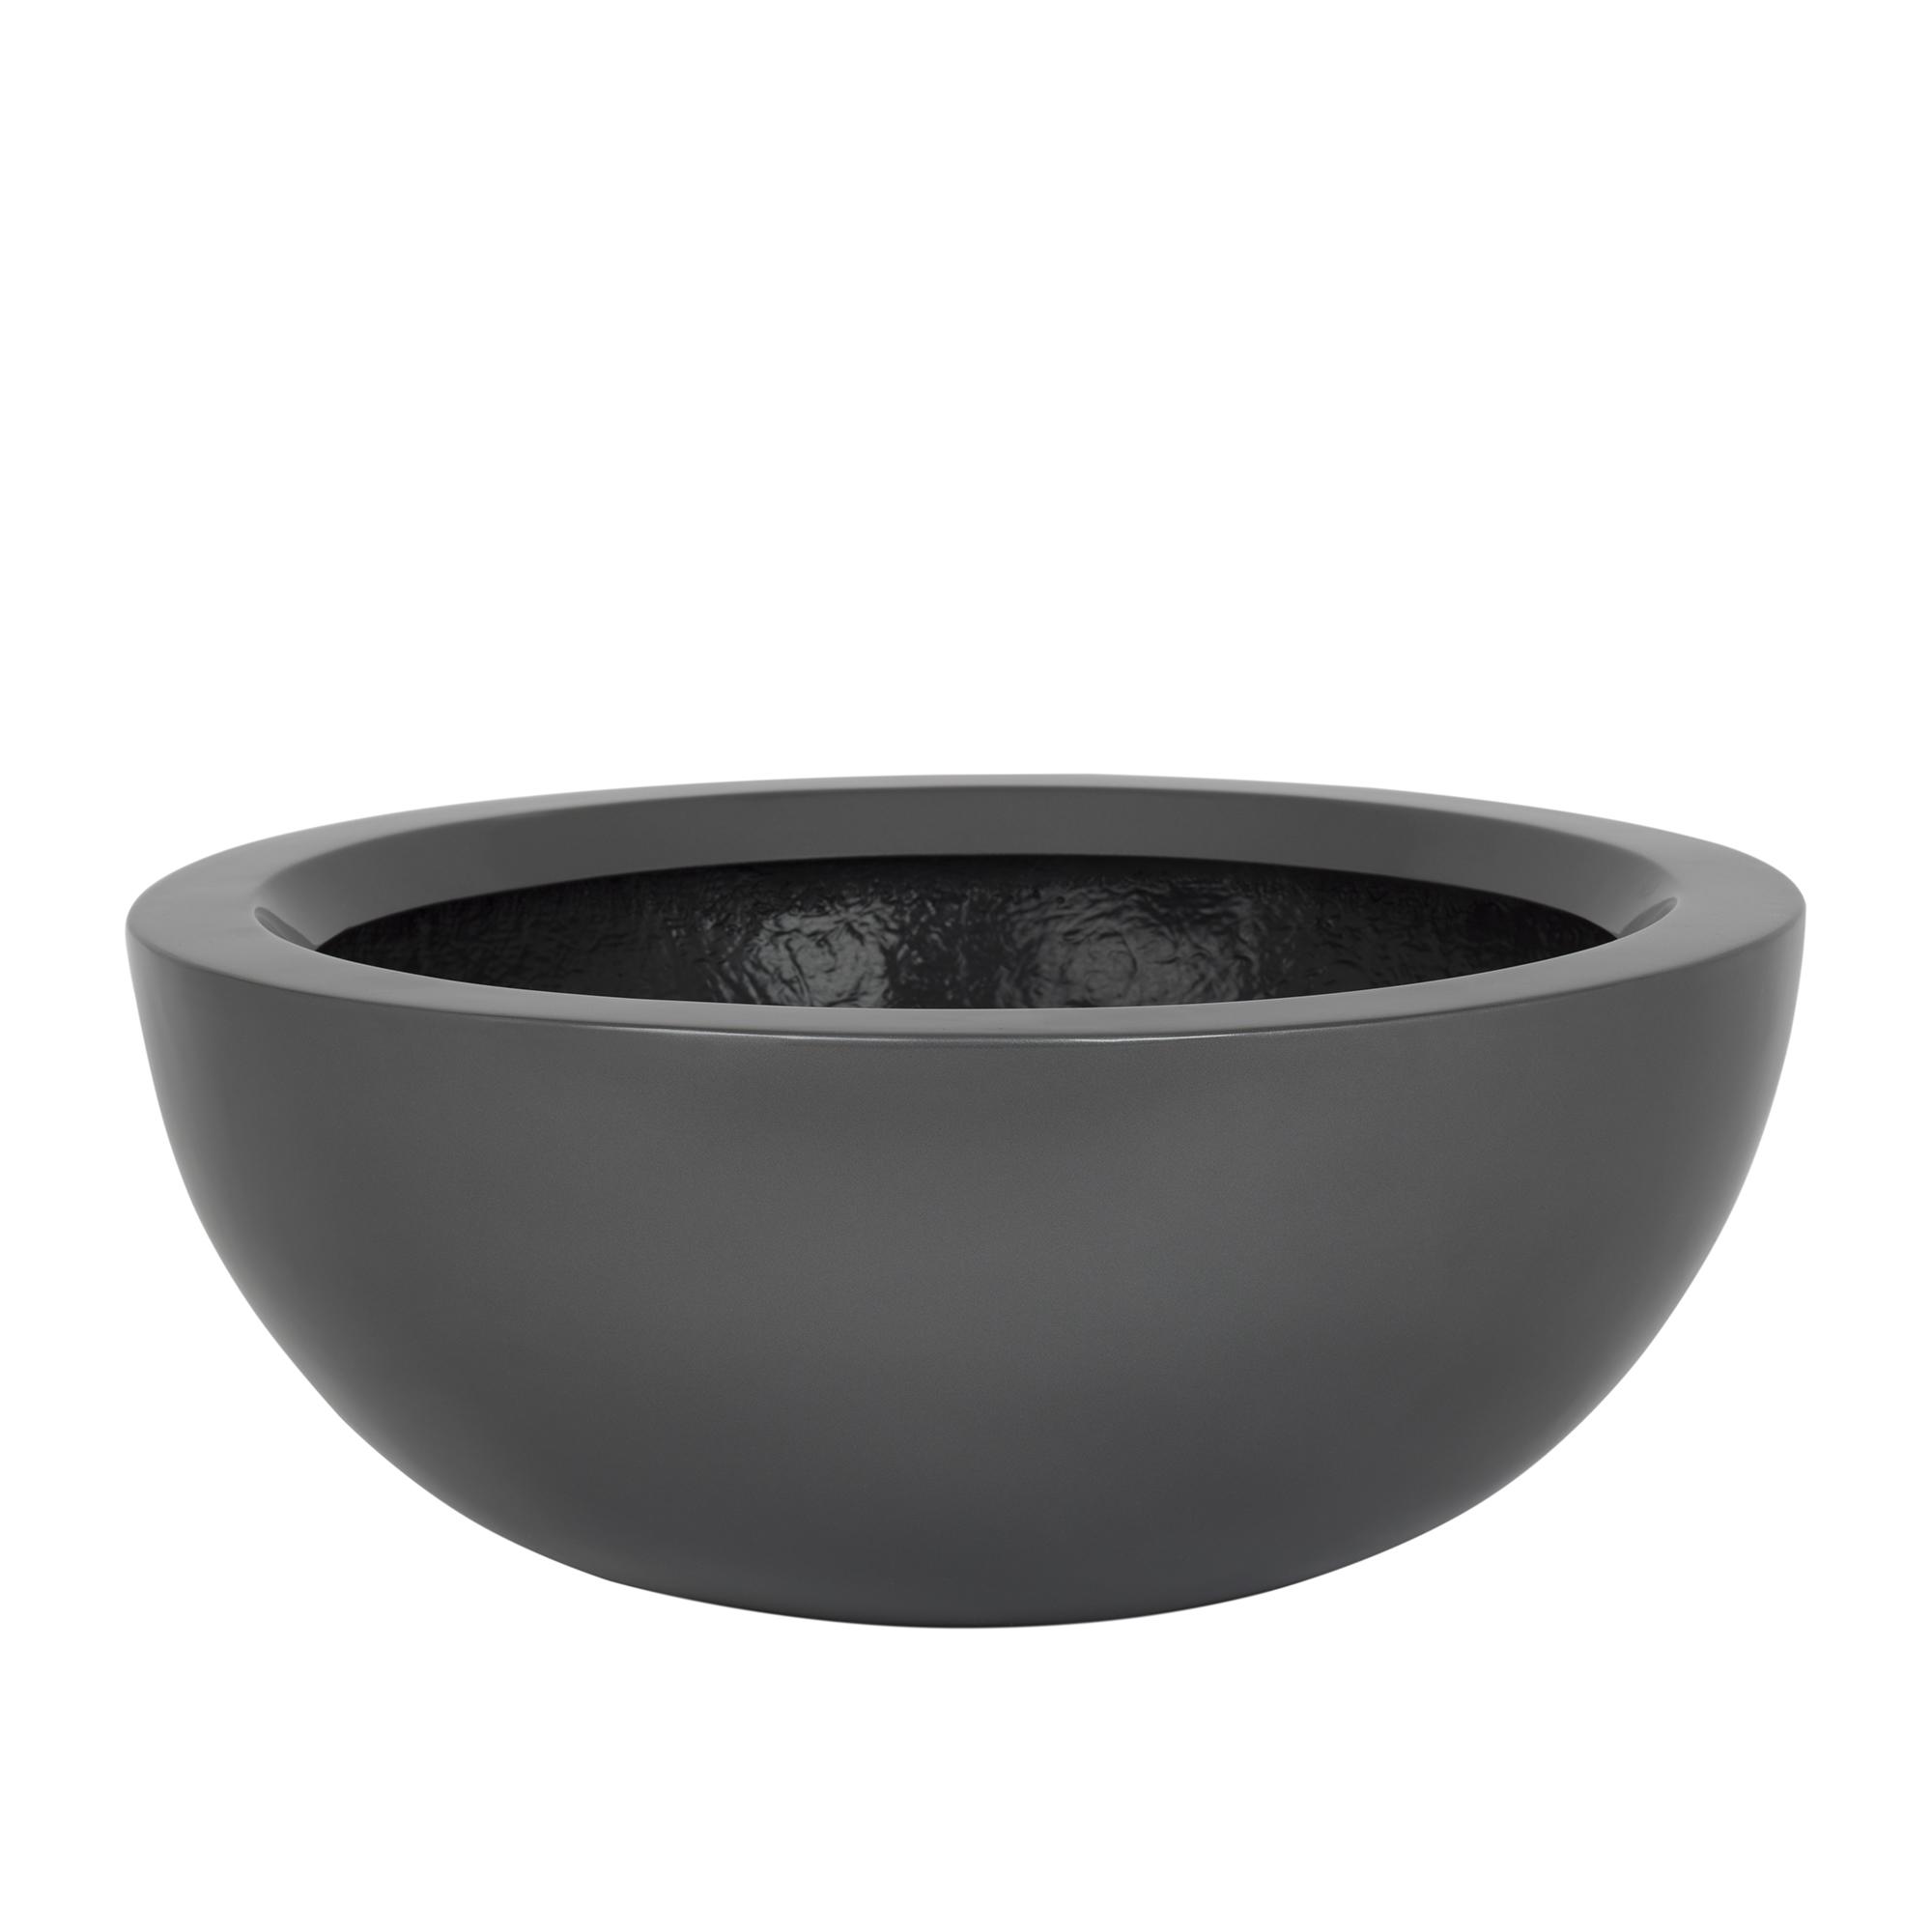 matt black fibreglass garden bowl planter or water feature indoor or outdoor use